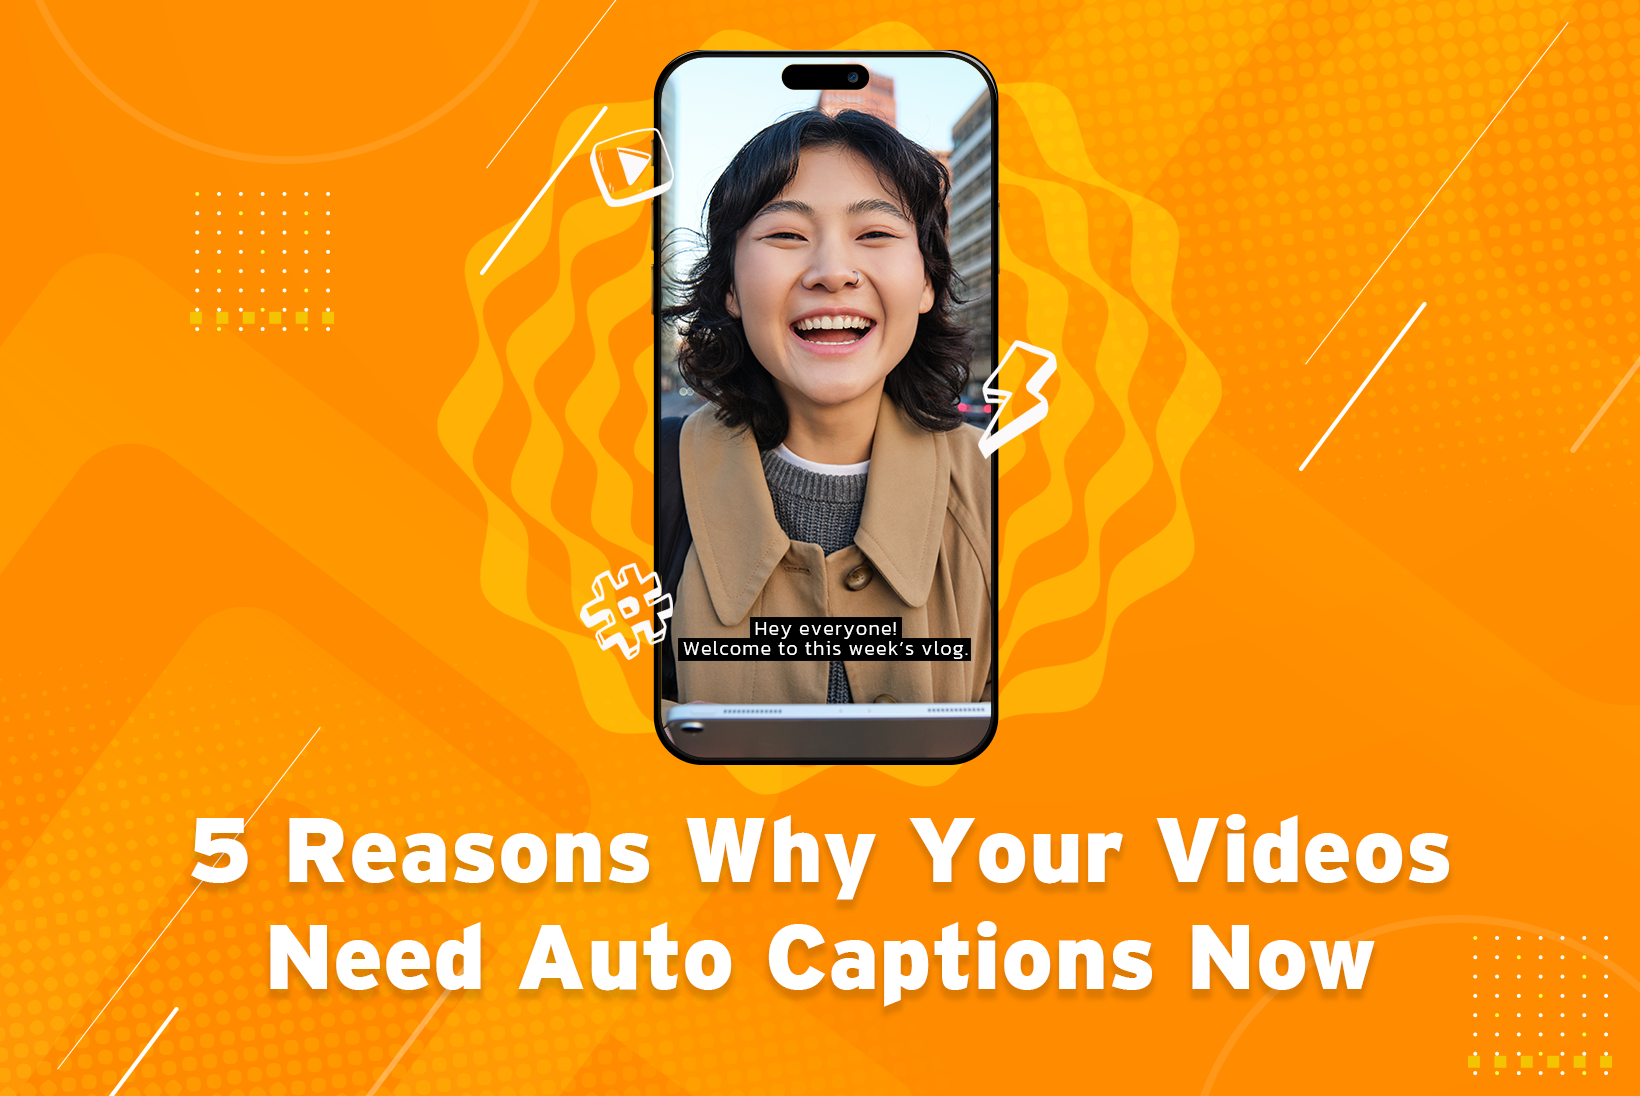 Reasons you need auto captions